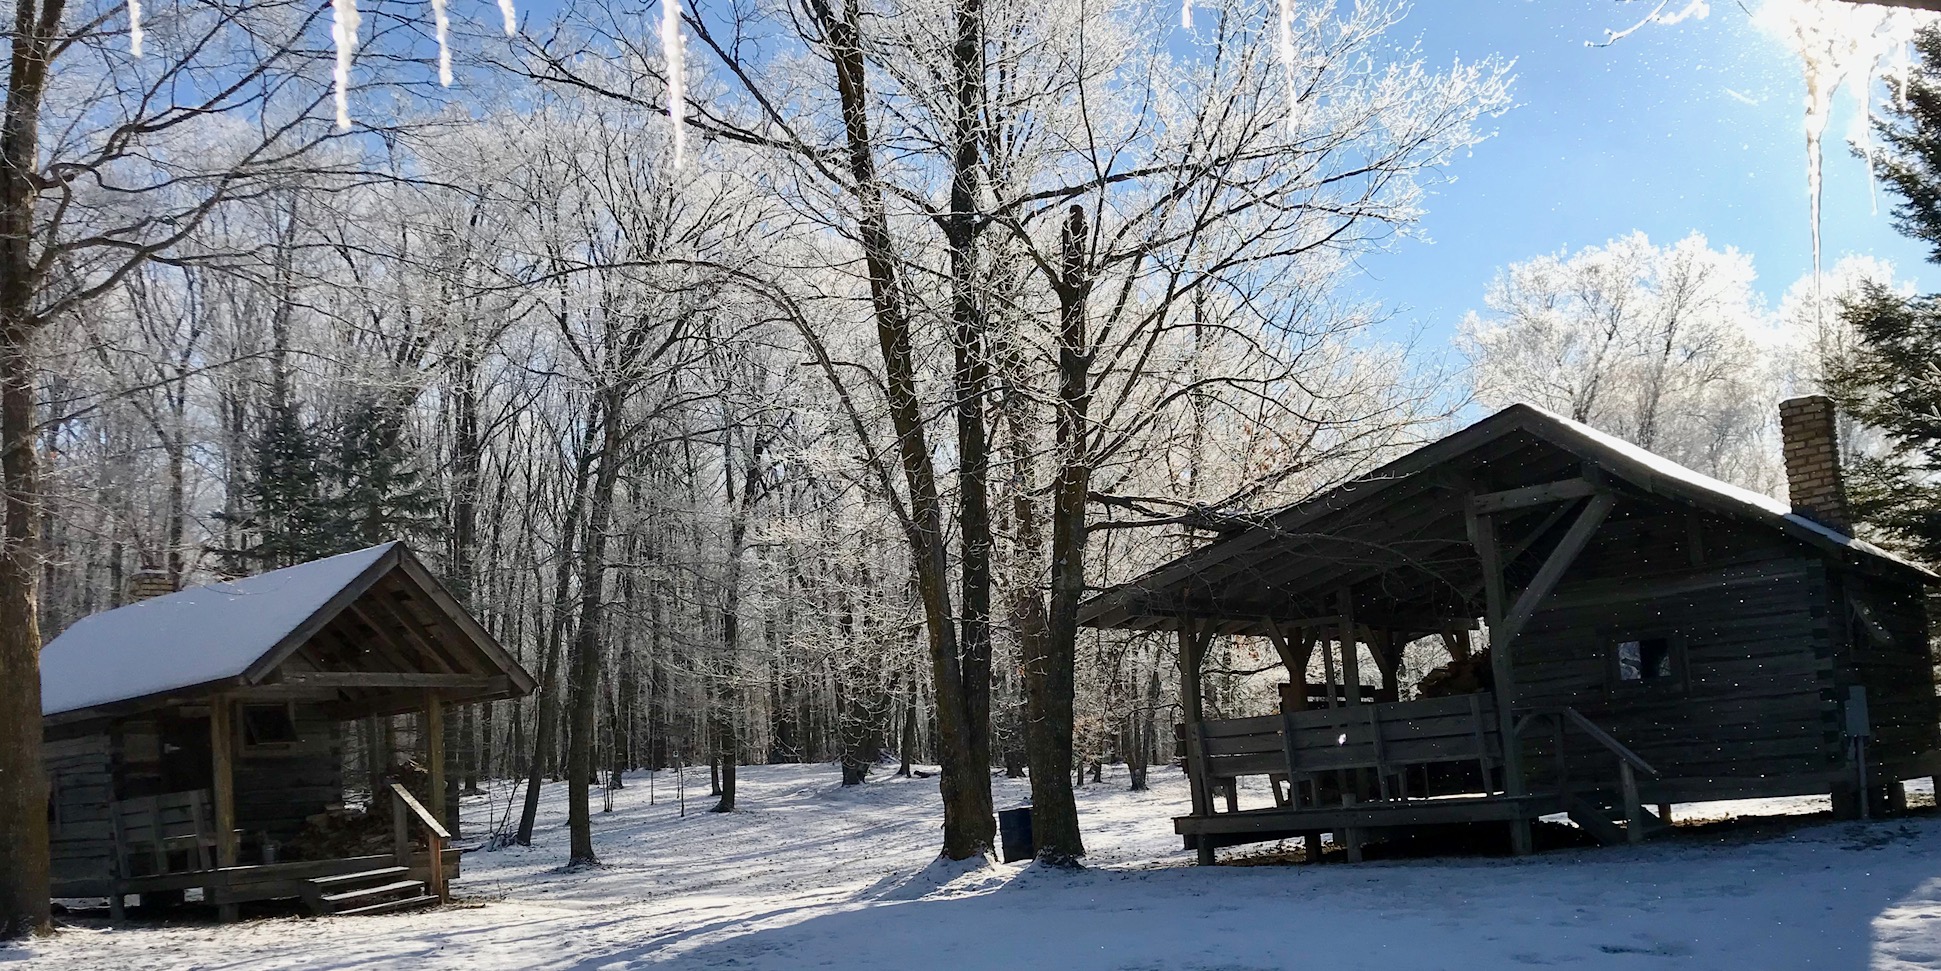 Frosty scene looking toward Finish Log and Sava Sauna cabins. November 7th, 2017.